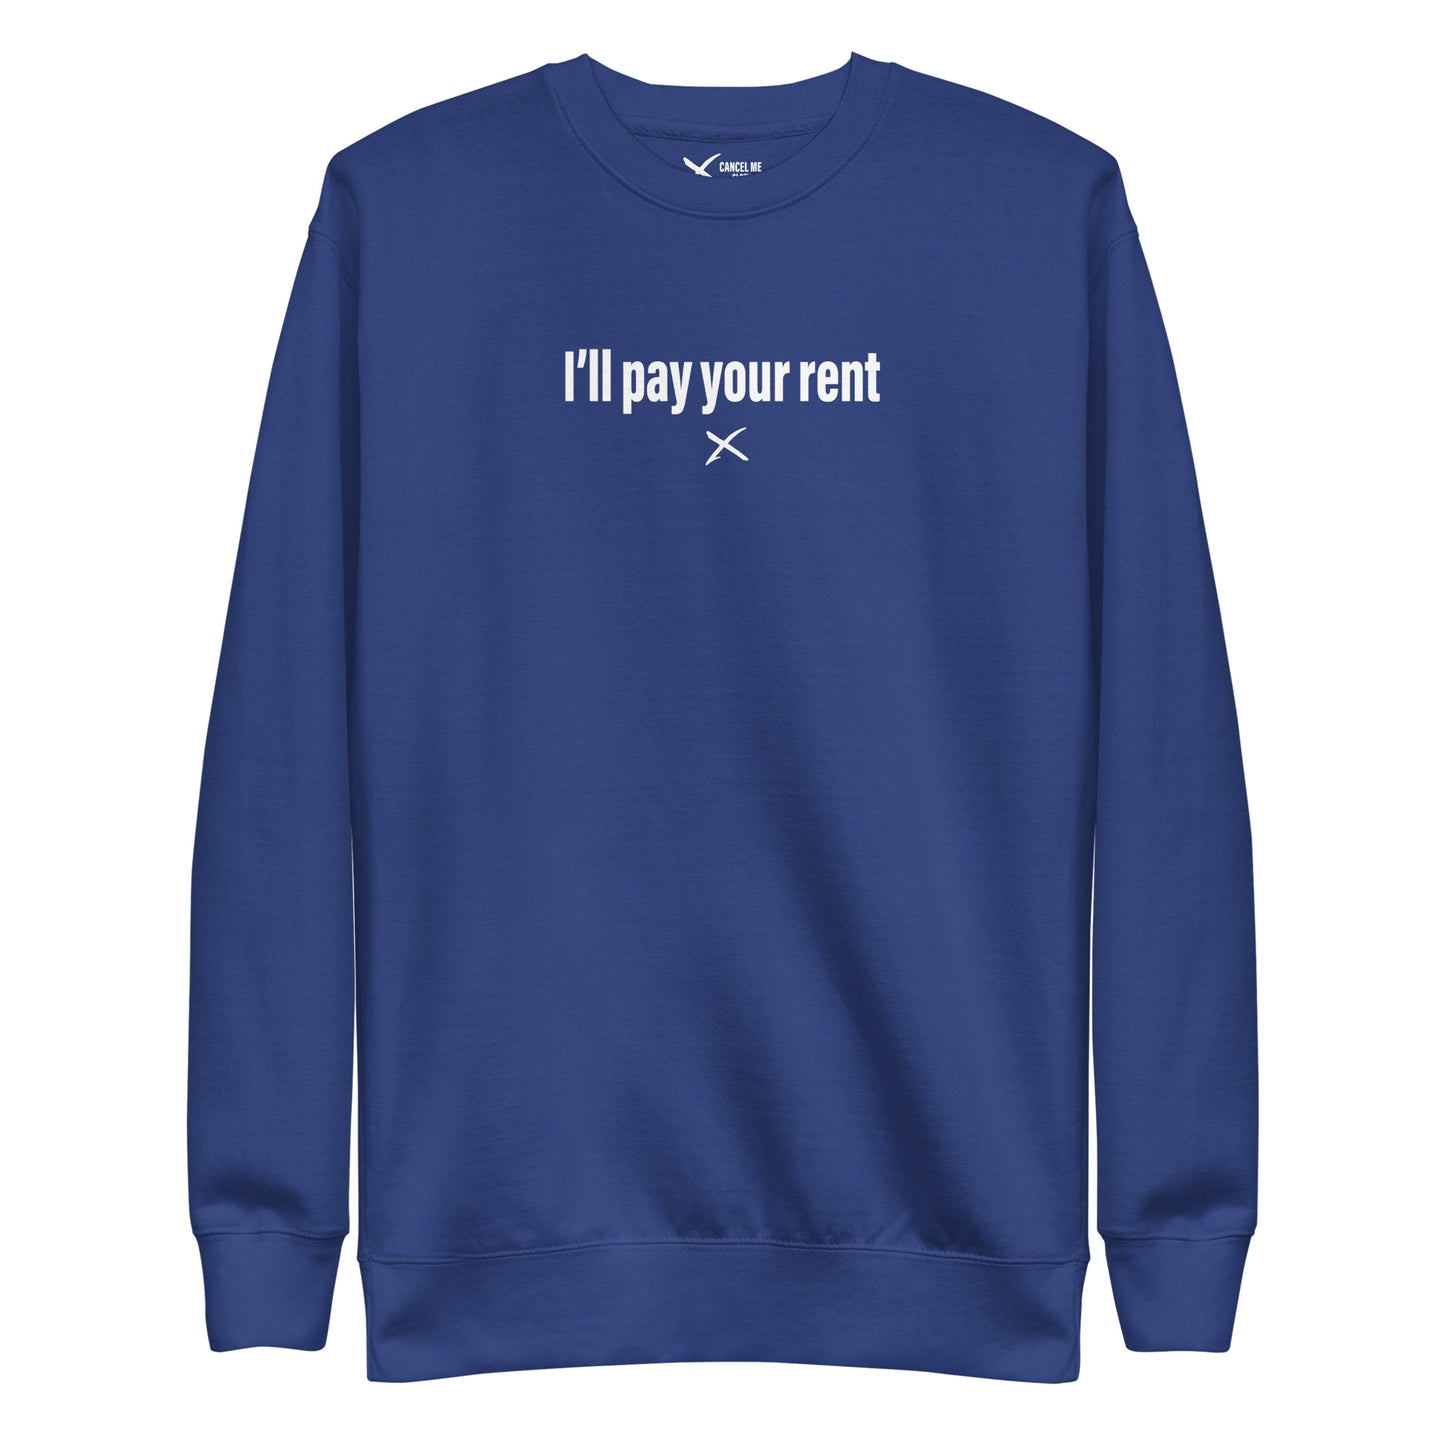 I'll pay your rent - Sweatshirt